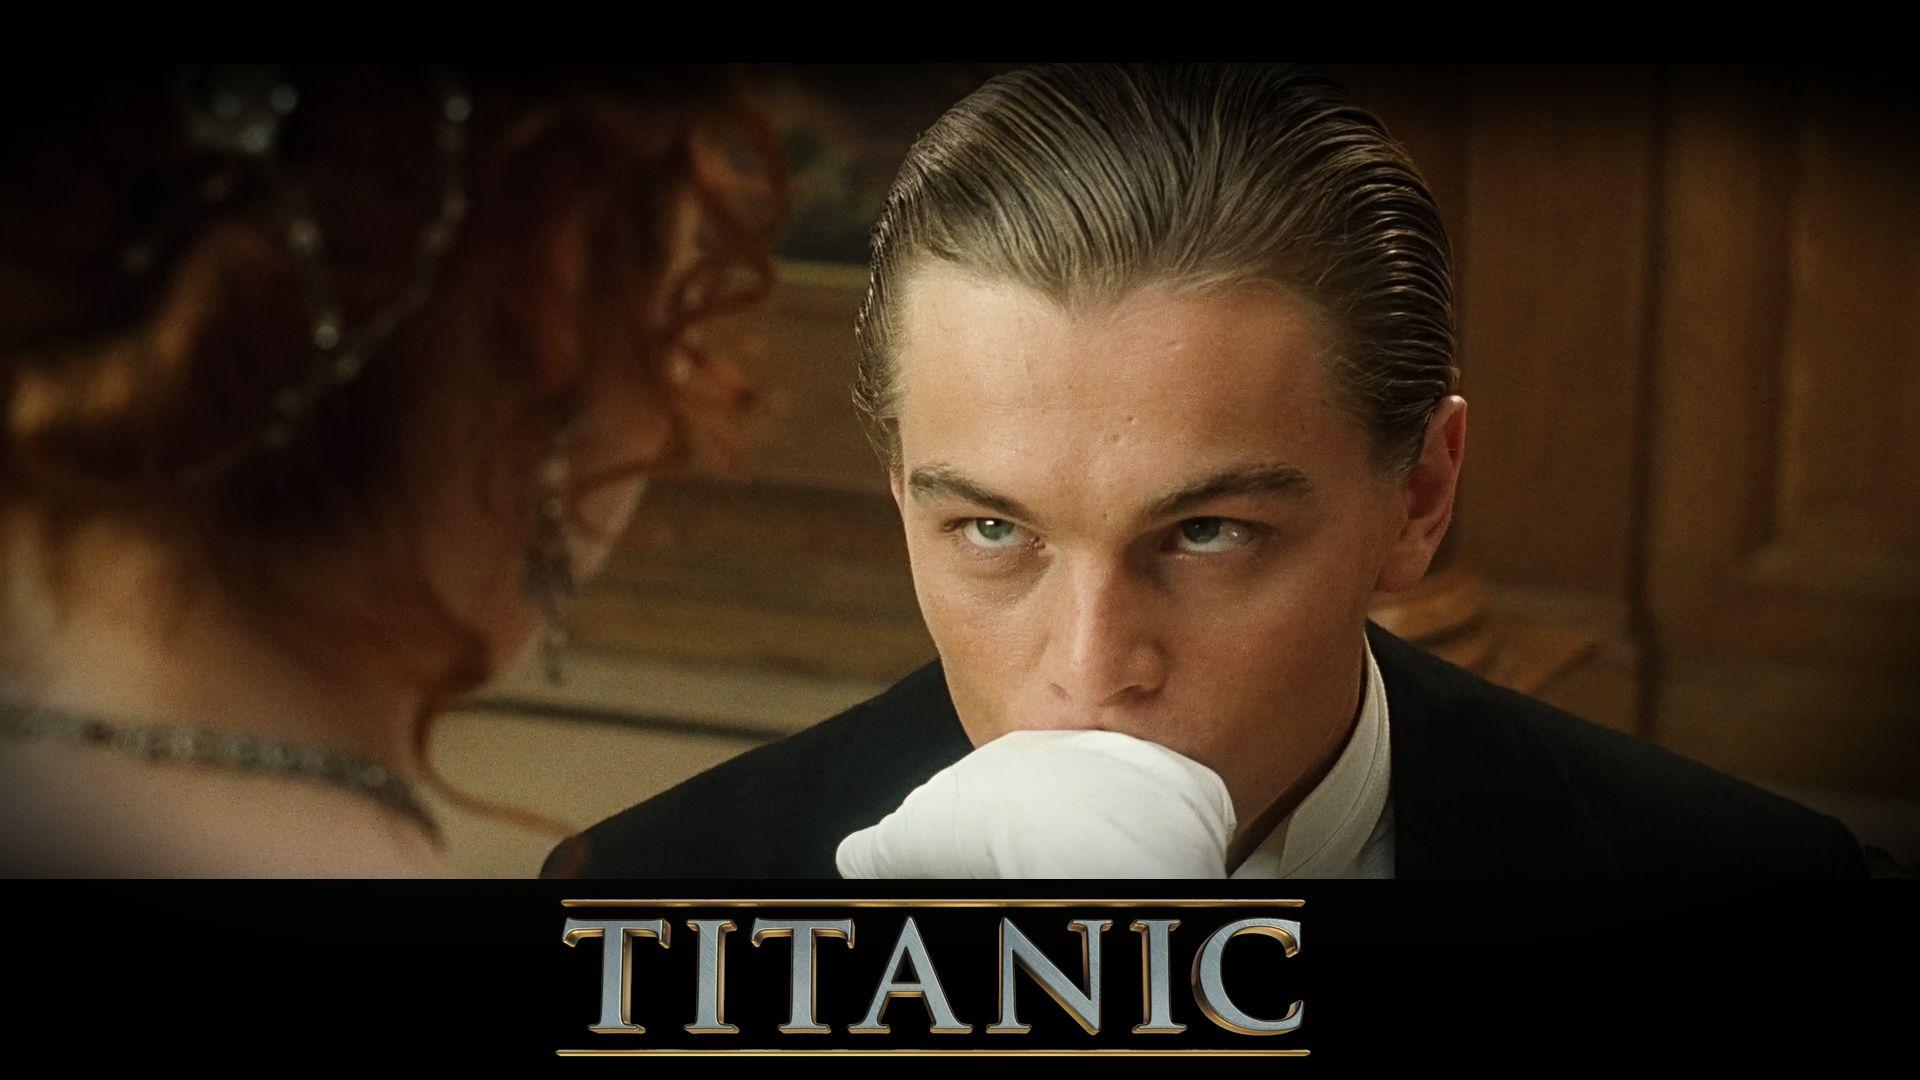 Titanic Movie Wallpaper.com HD 1080P 12 HD Wallpaper